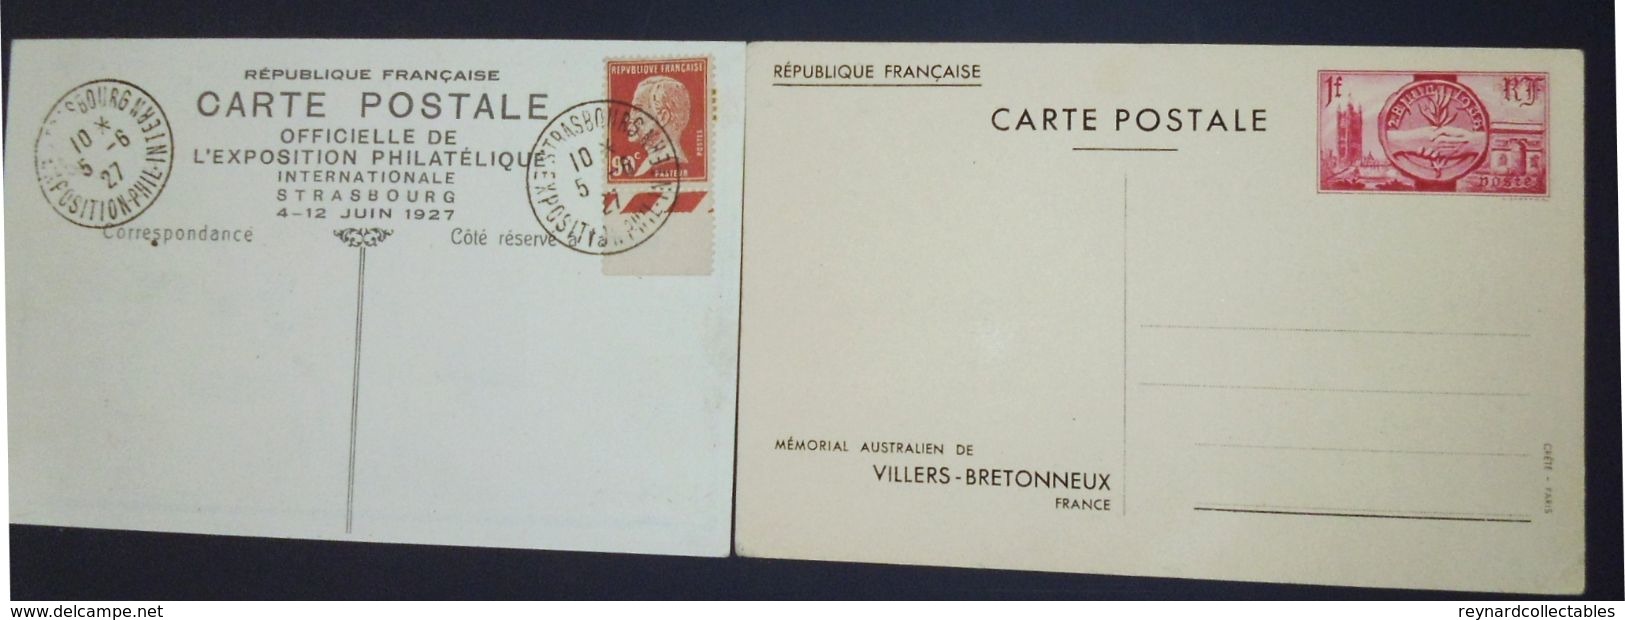 France v.fine collection postal stat/entier postale(250) 19th/20thC inc cards,envelope,reply cards. 1925 Paris++